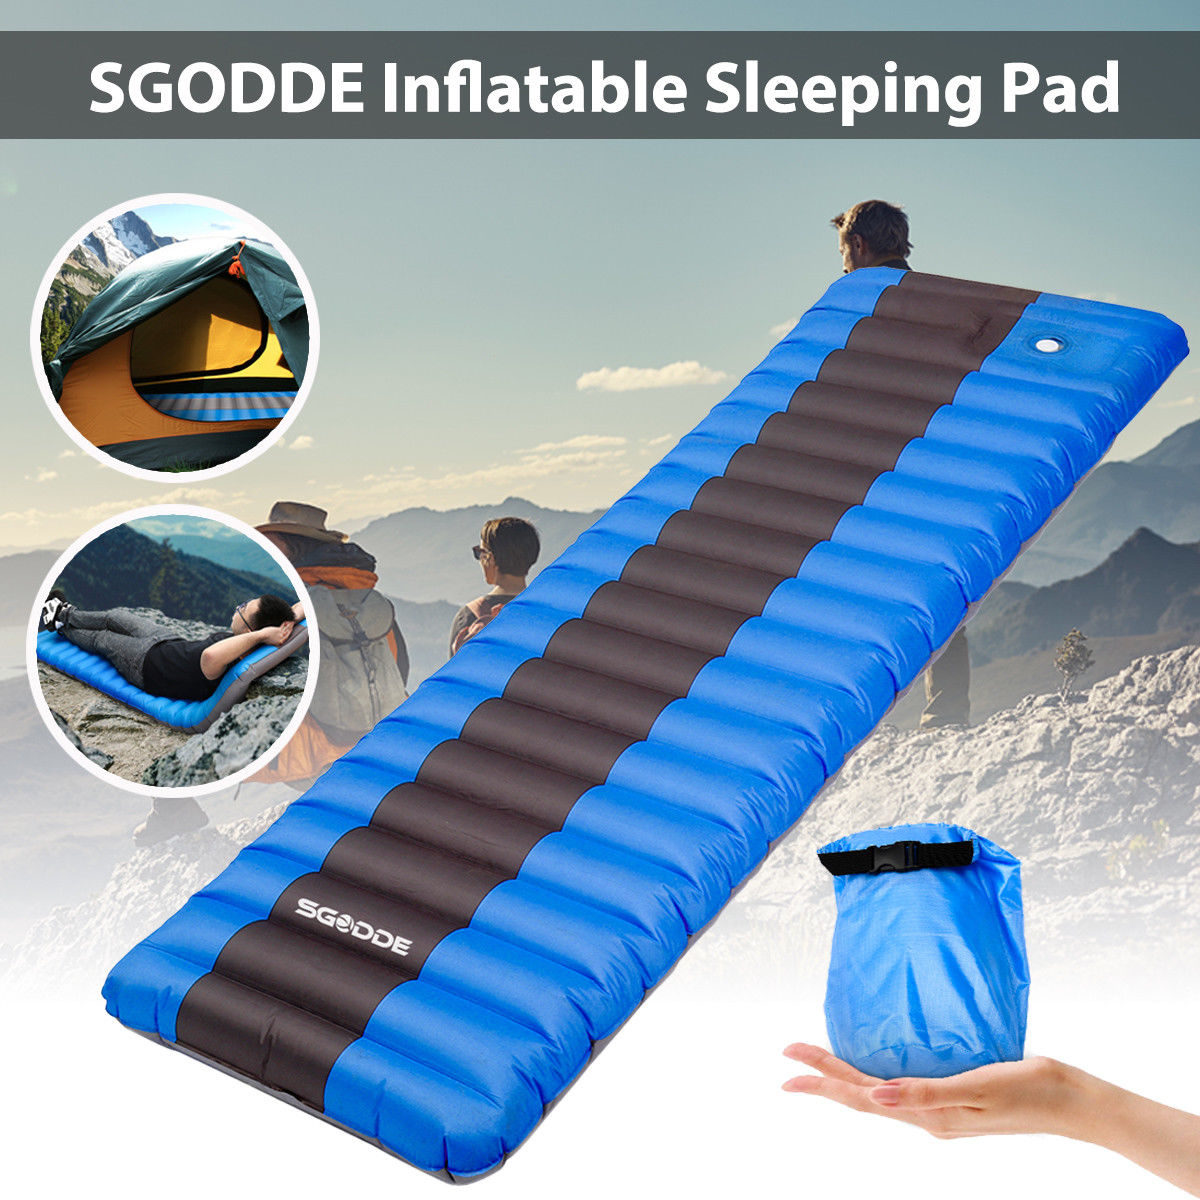 Elastic-Sponge-Outdoor-Camping-Inflatable-Sleeping-Pad-Ultralight-Air-Mat-Mattresses-Hiking-Inflatab-1337011-1